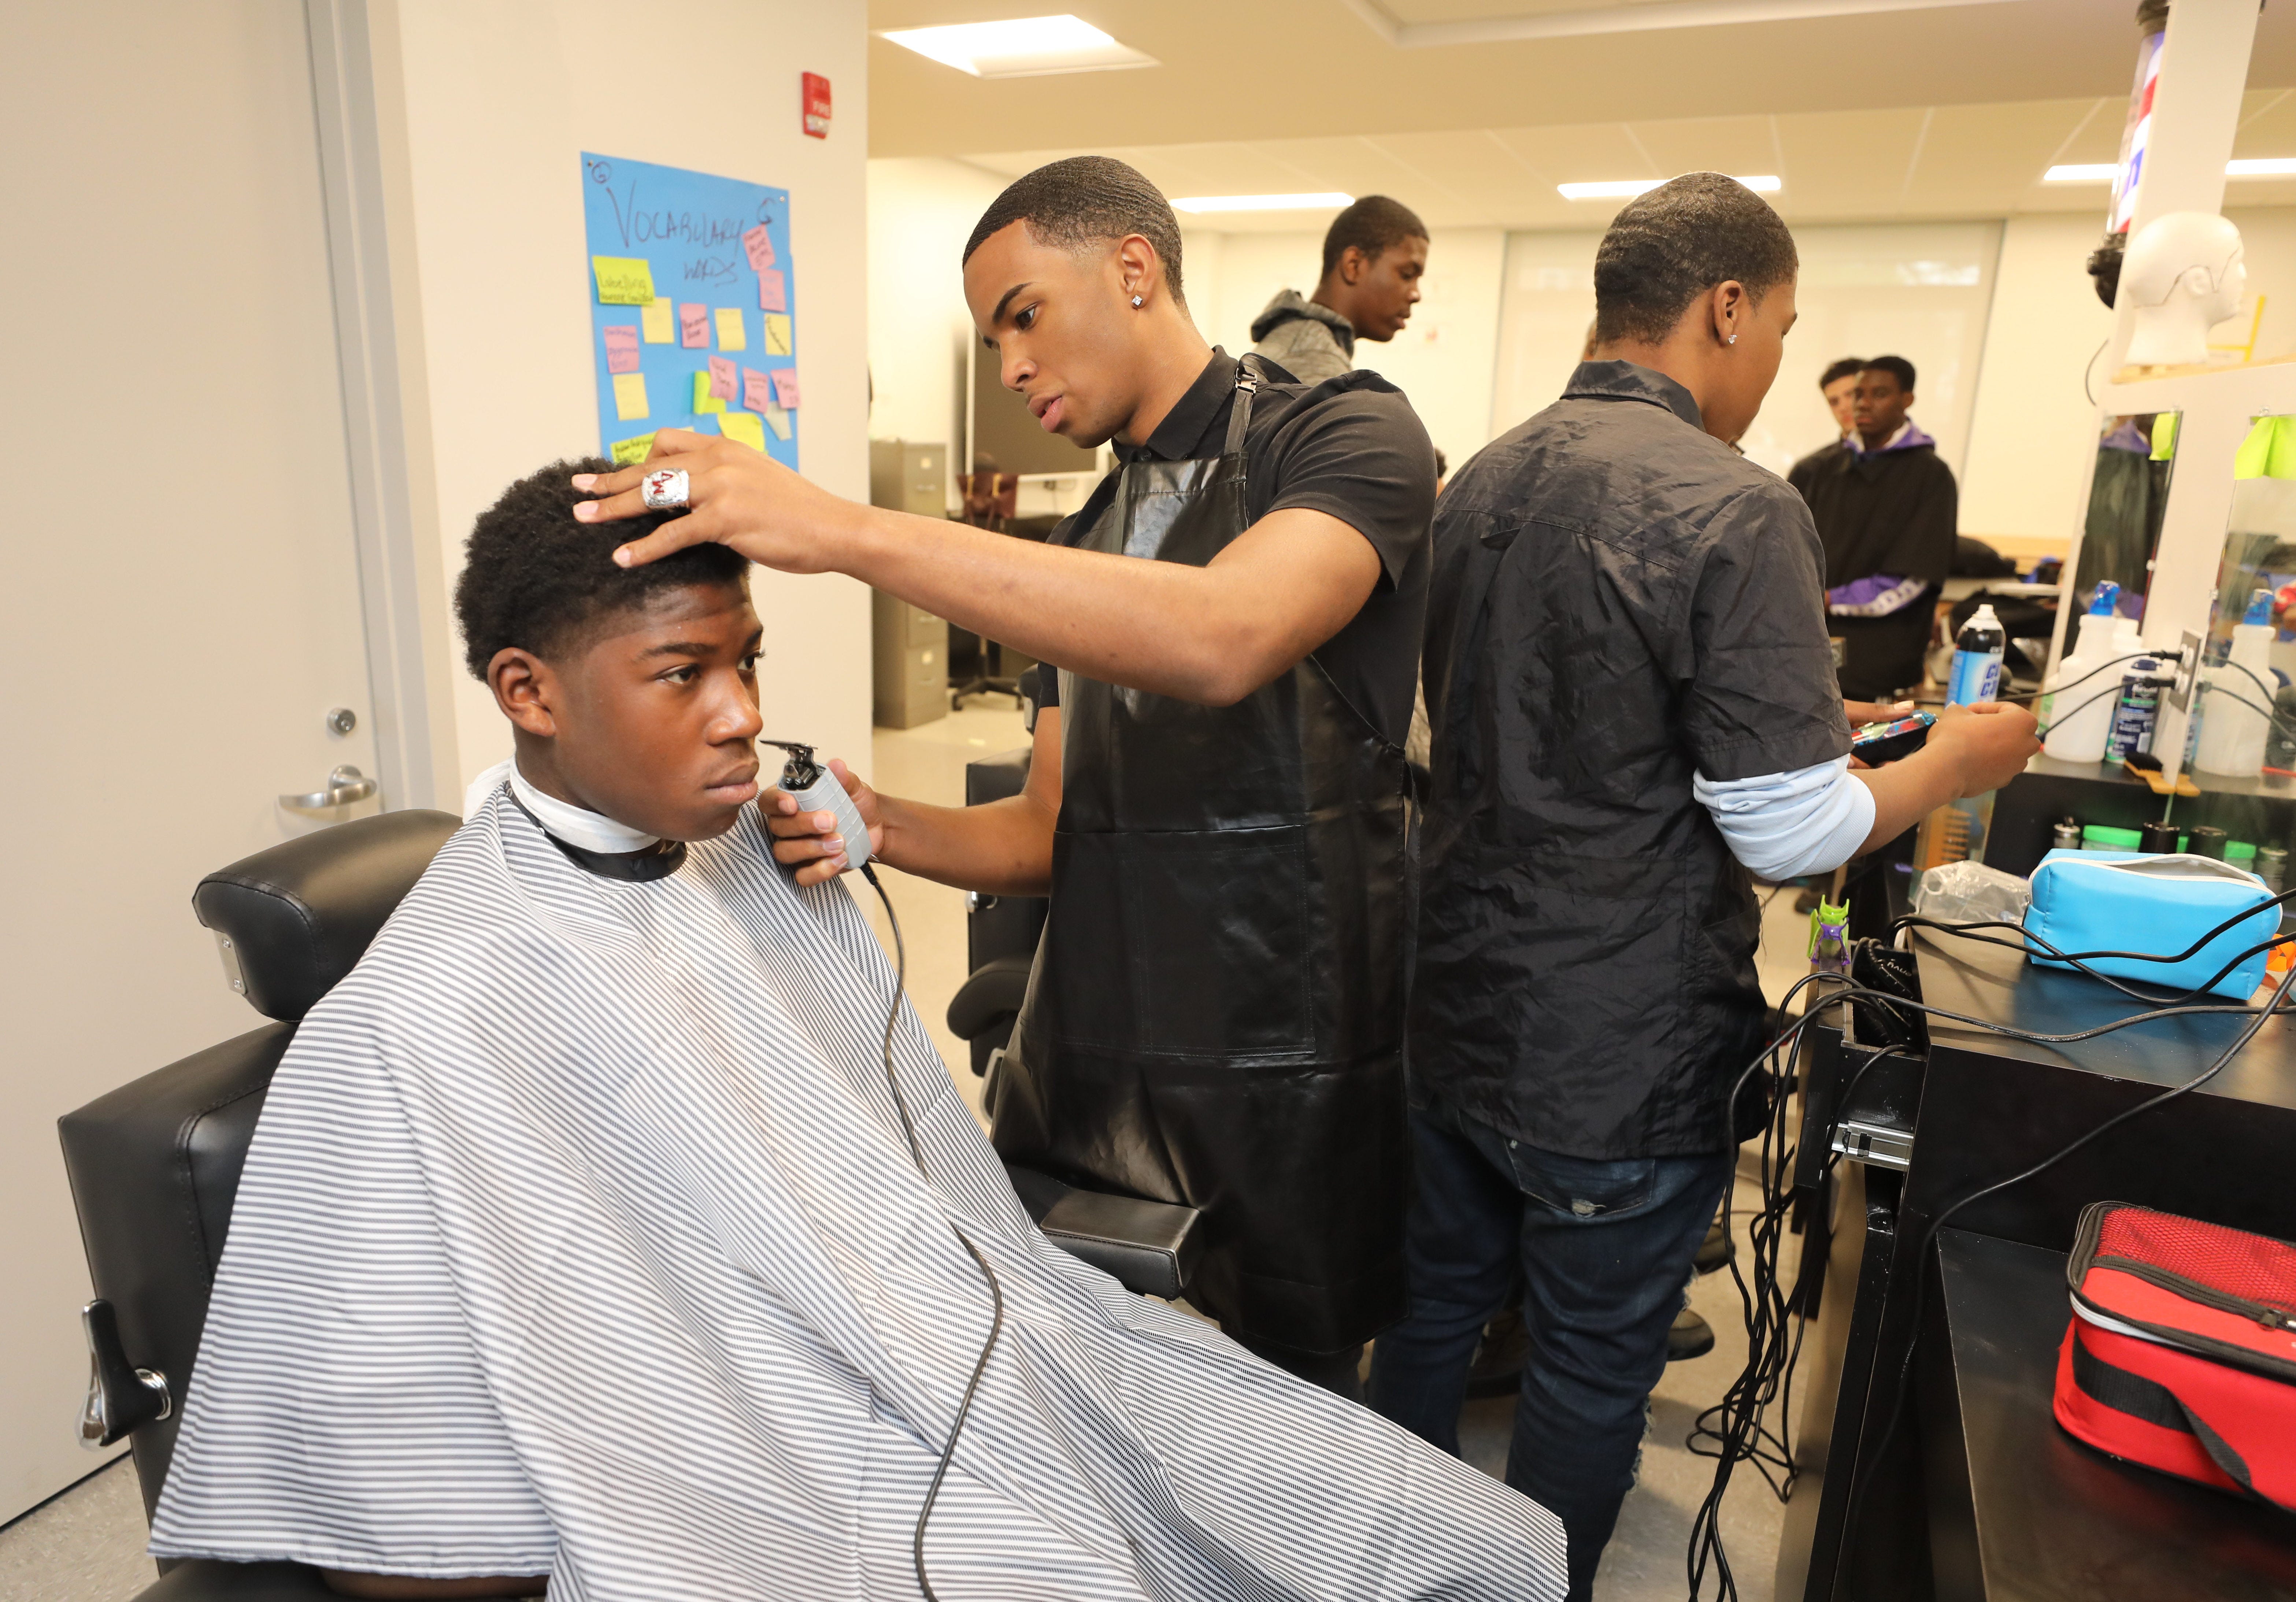 Barber shop class comes to Mount Vernon High School